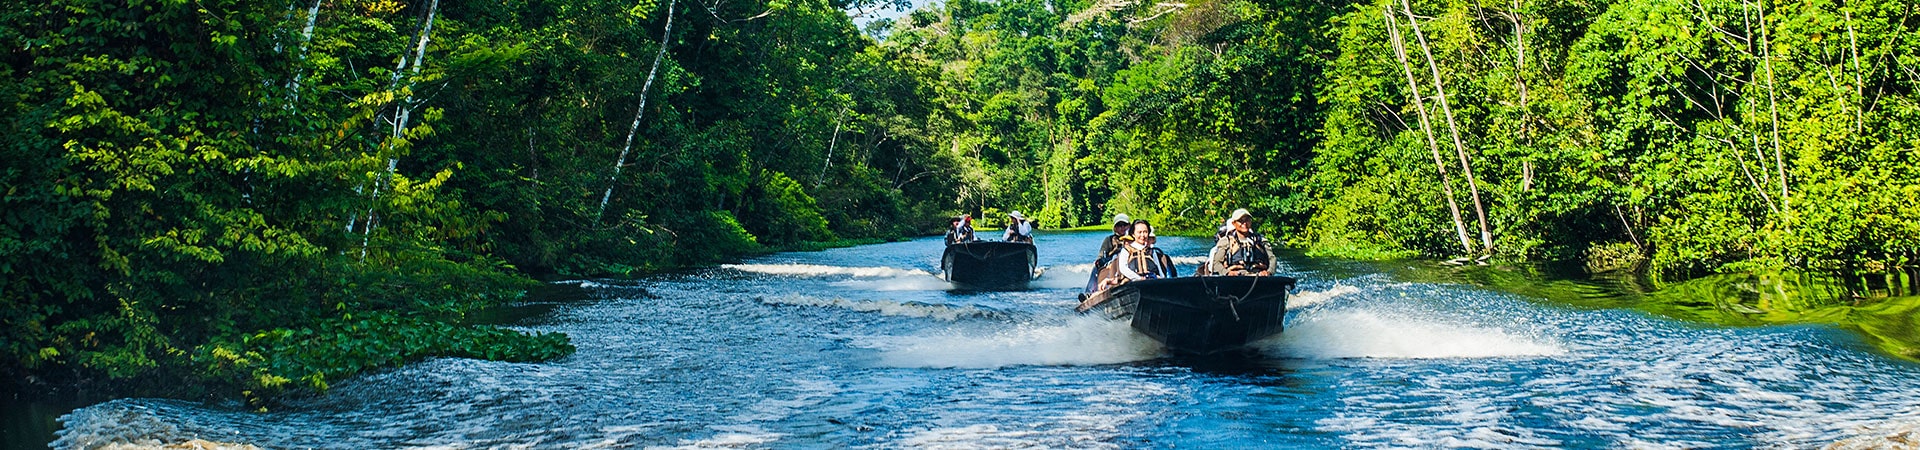 Top 15 must see Amazon Animals on River Safari | Amazon River Cruise